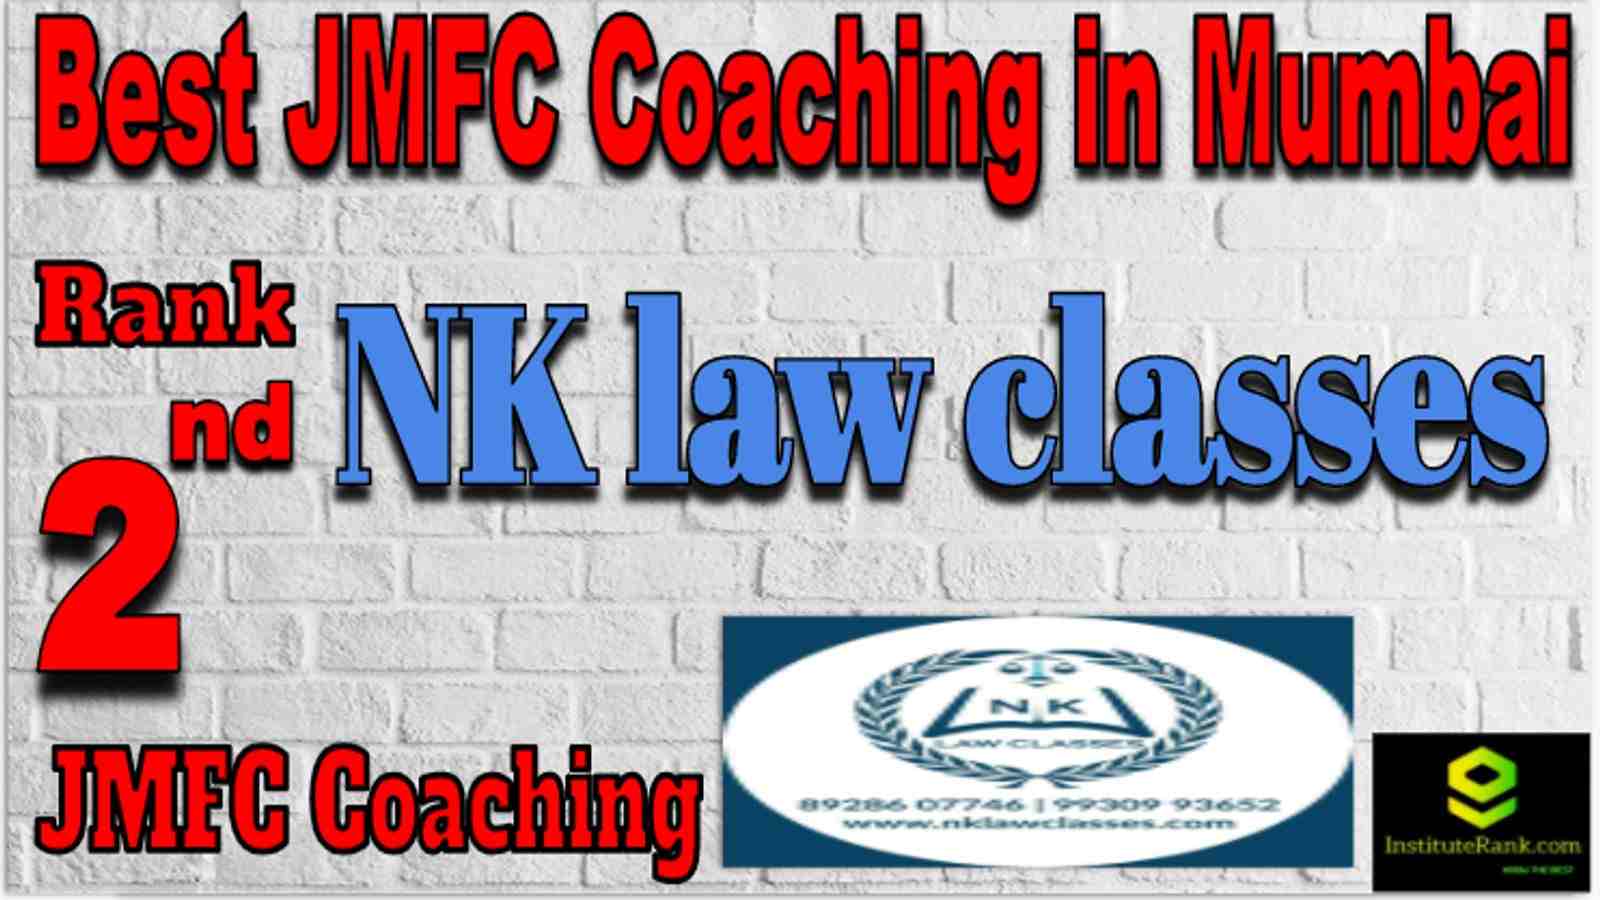 Rank 2 Best JMFC Coaching in Mumbai